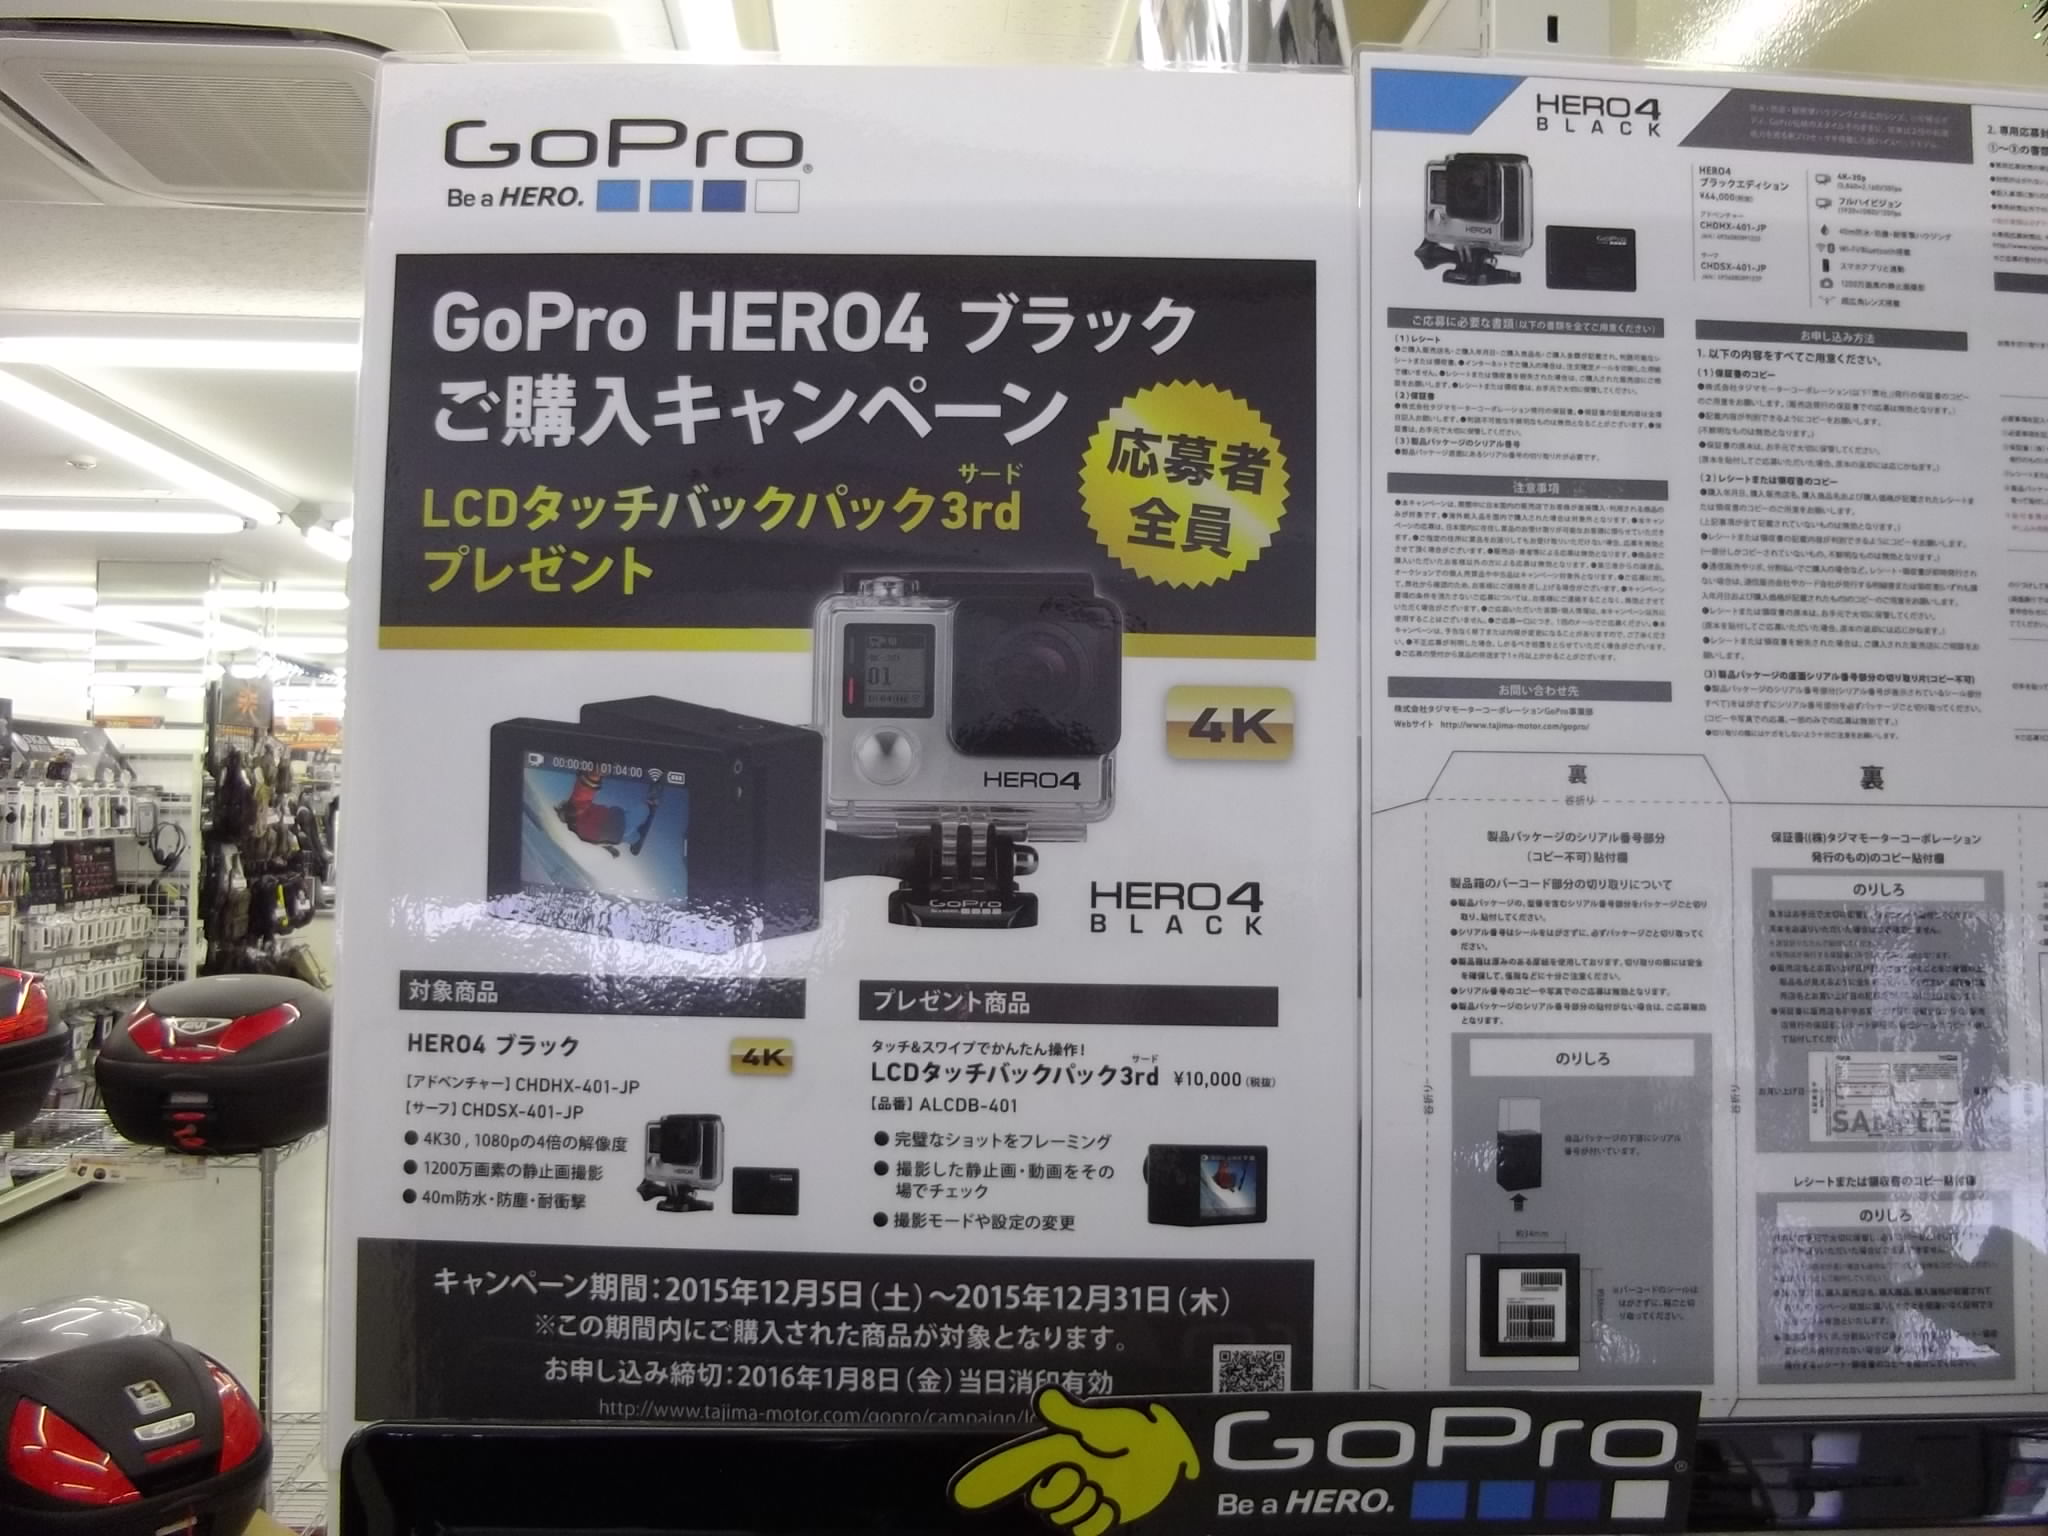 GoPro HERO4 ブラック ご購入キャンペーン!! - ライコランド吹田店のブログ